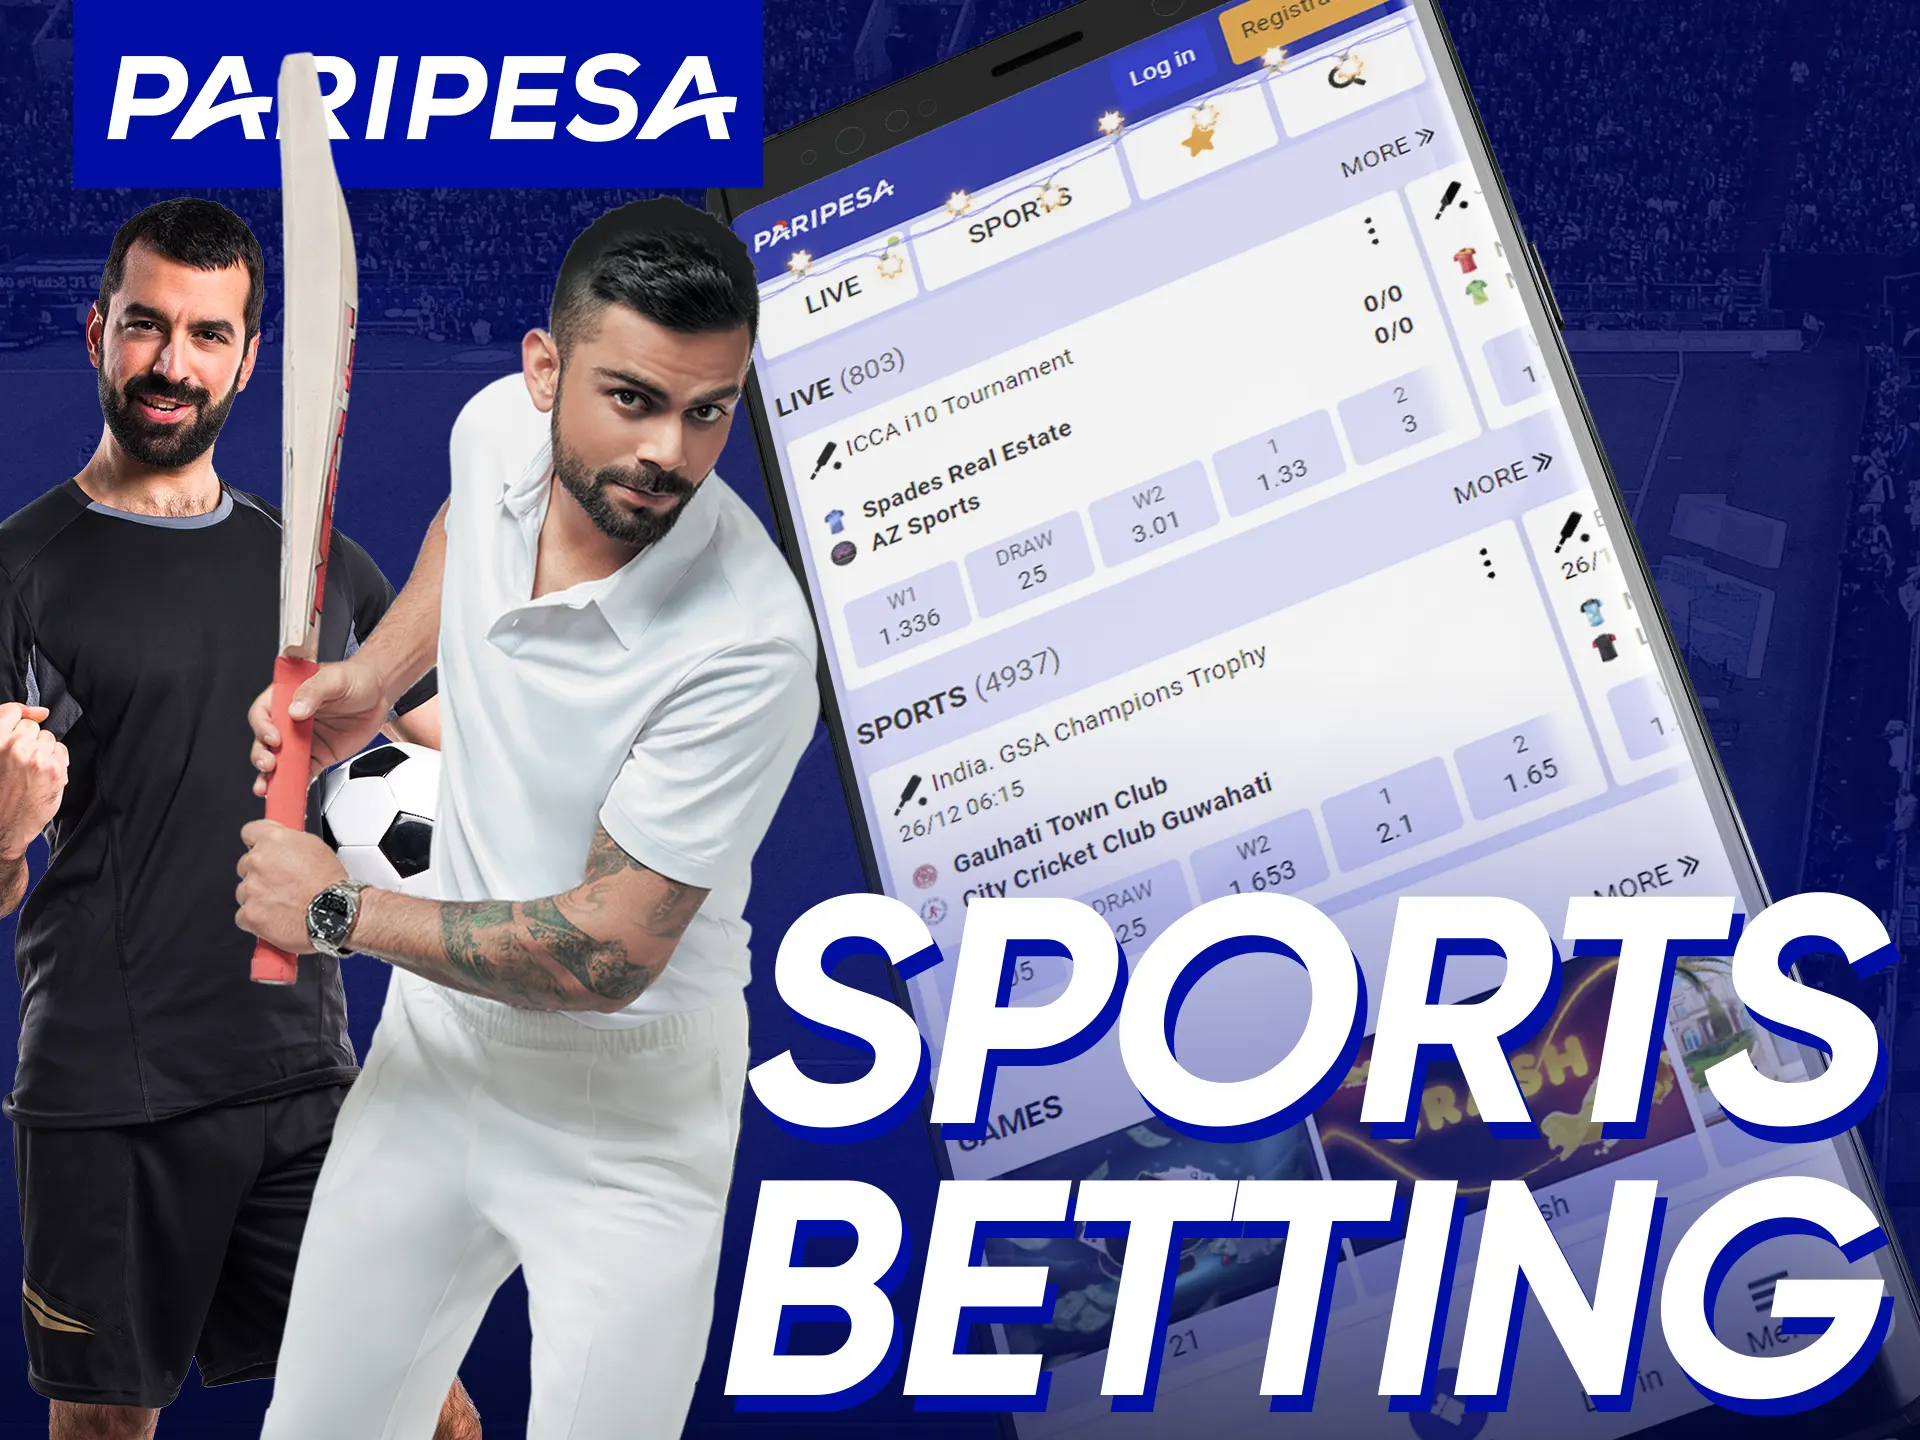 Paripesa app giving a big variety of sports betting options through app.